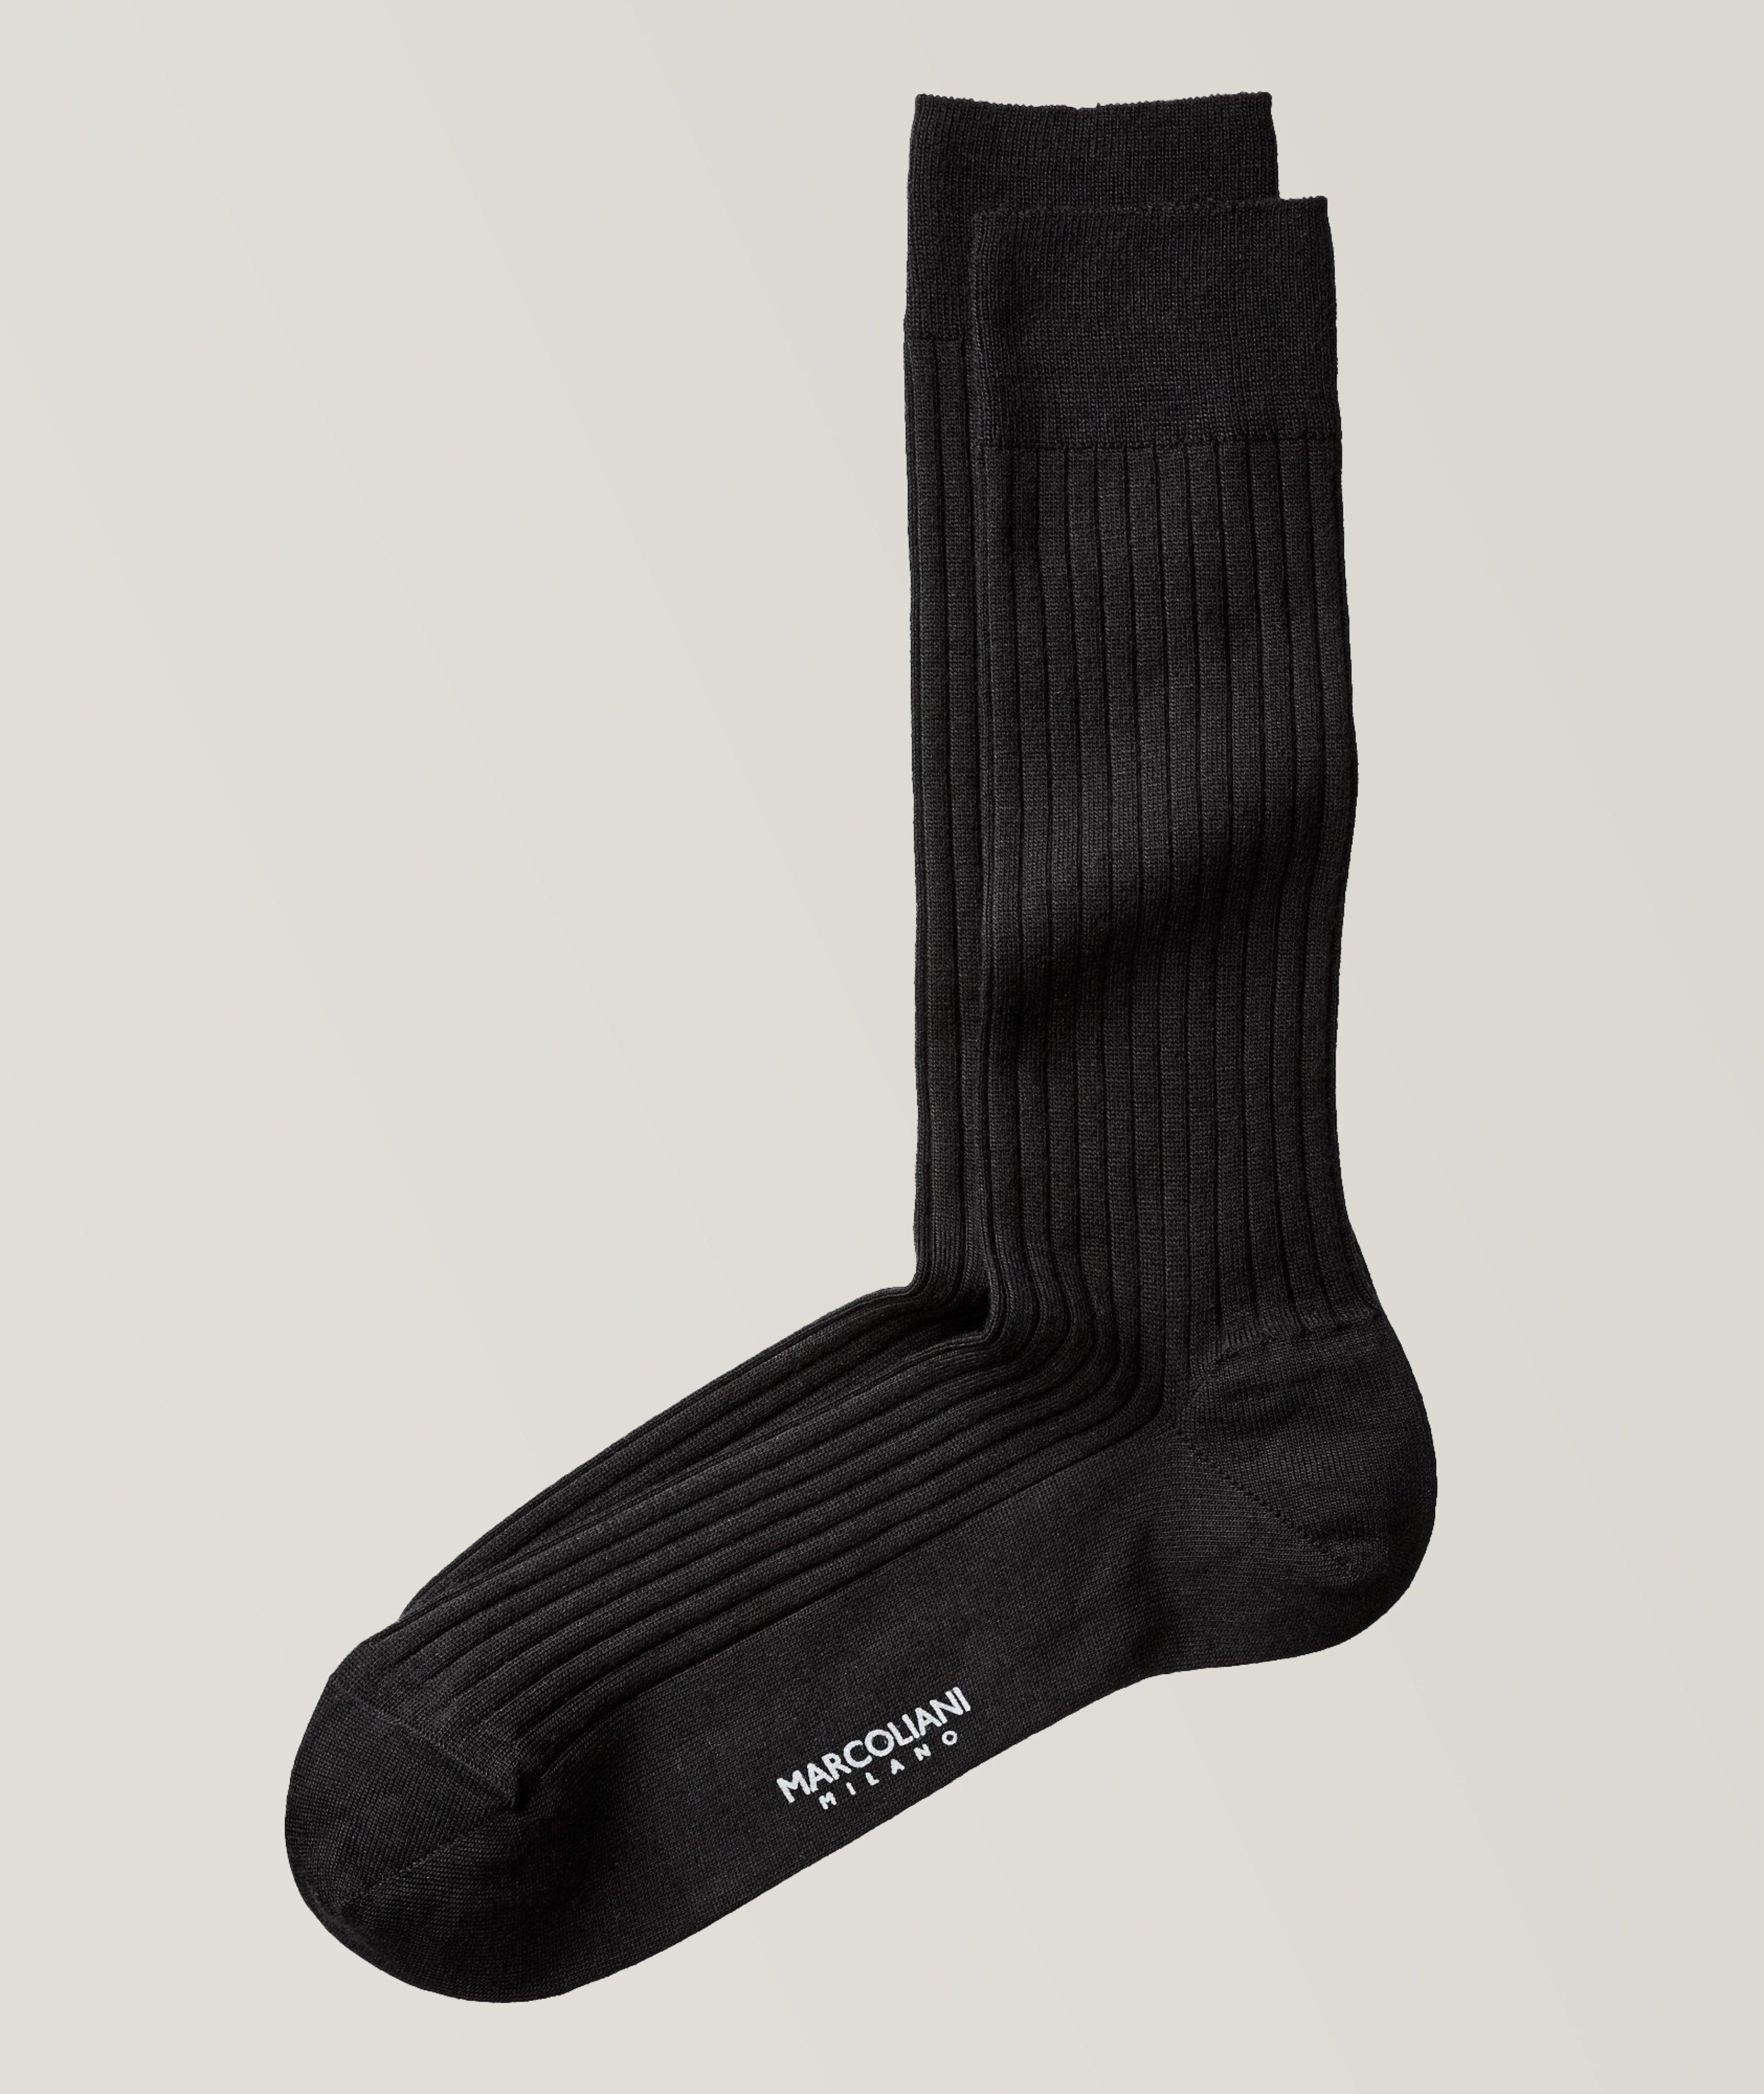 Wool Socks image 0